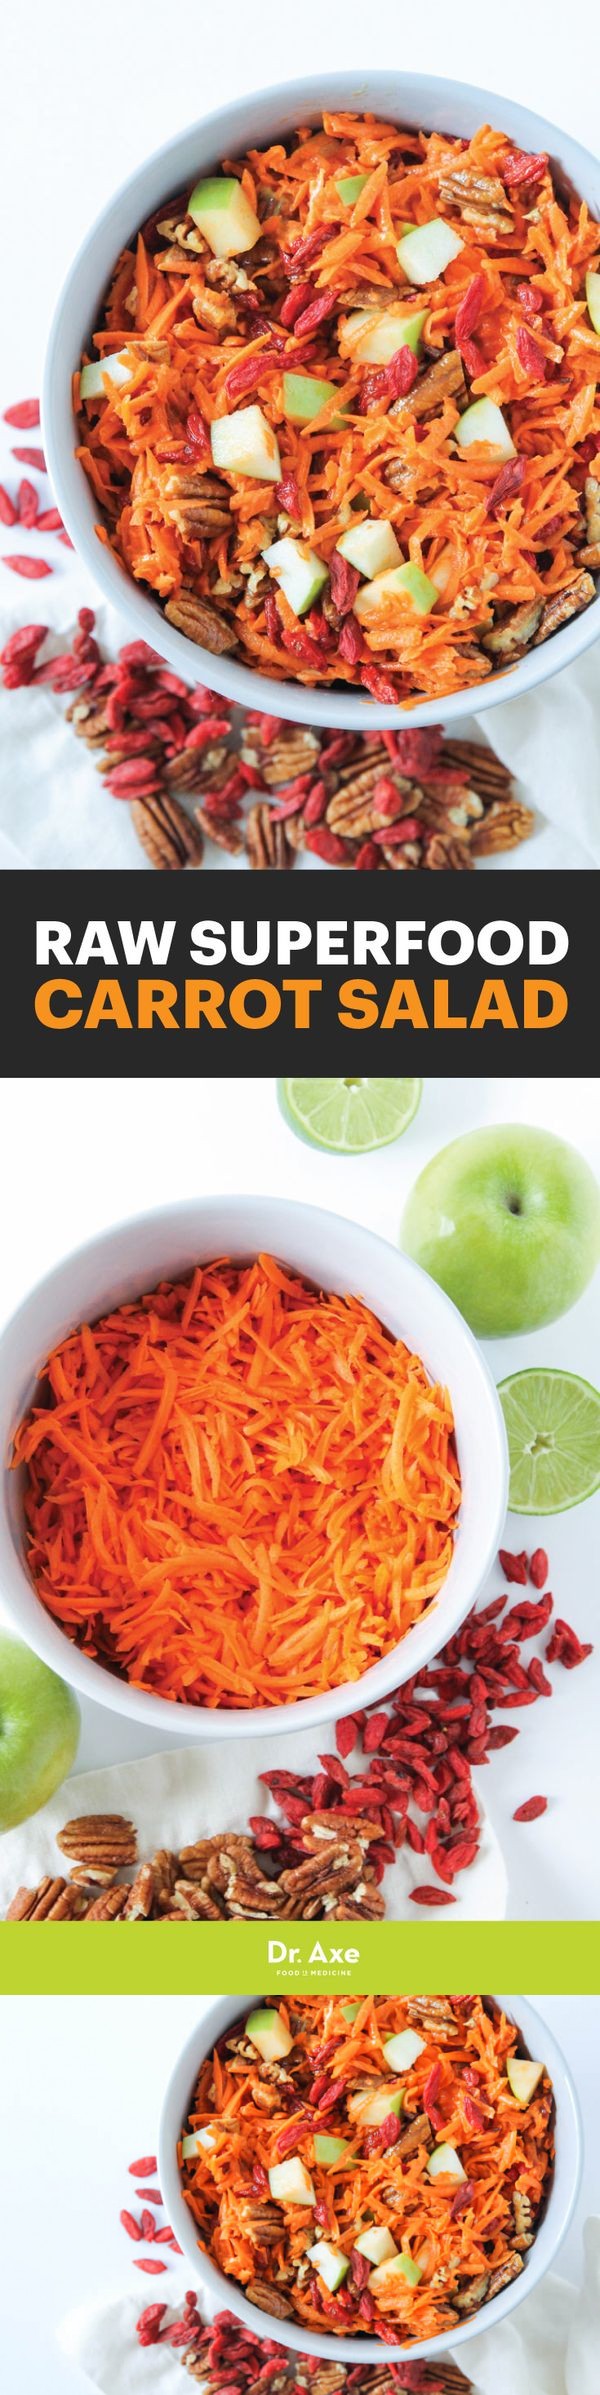 Raw Superfood Carrot Salad